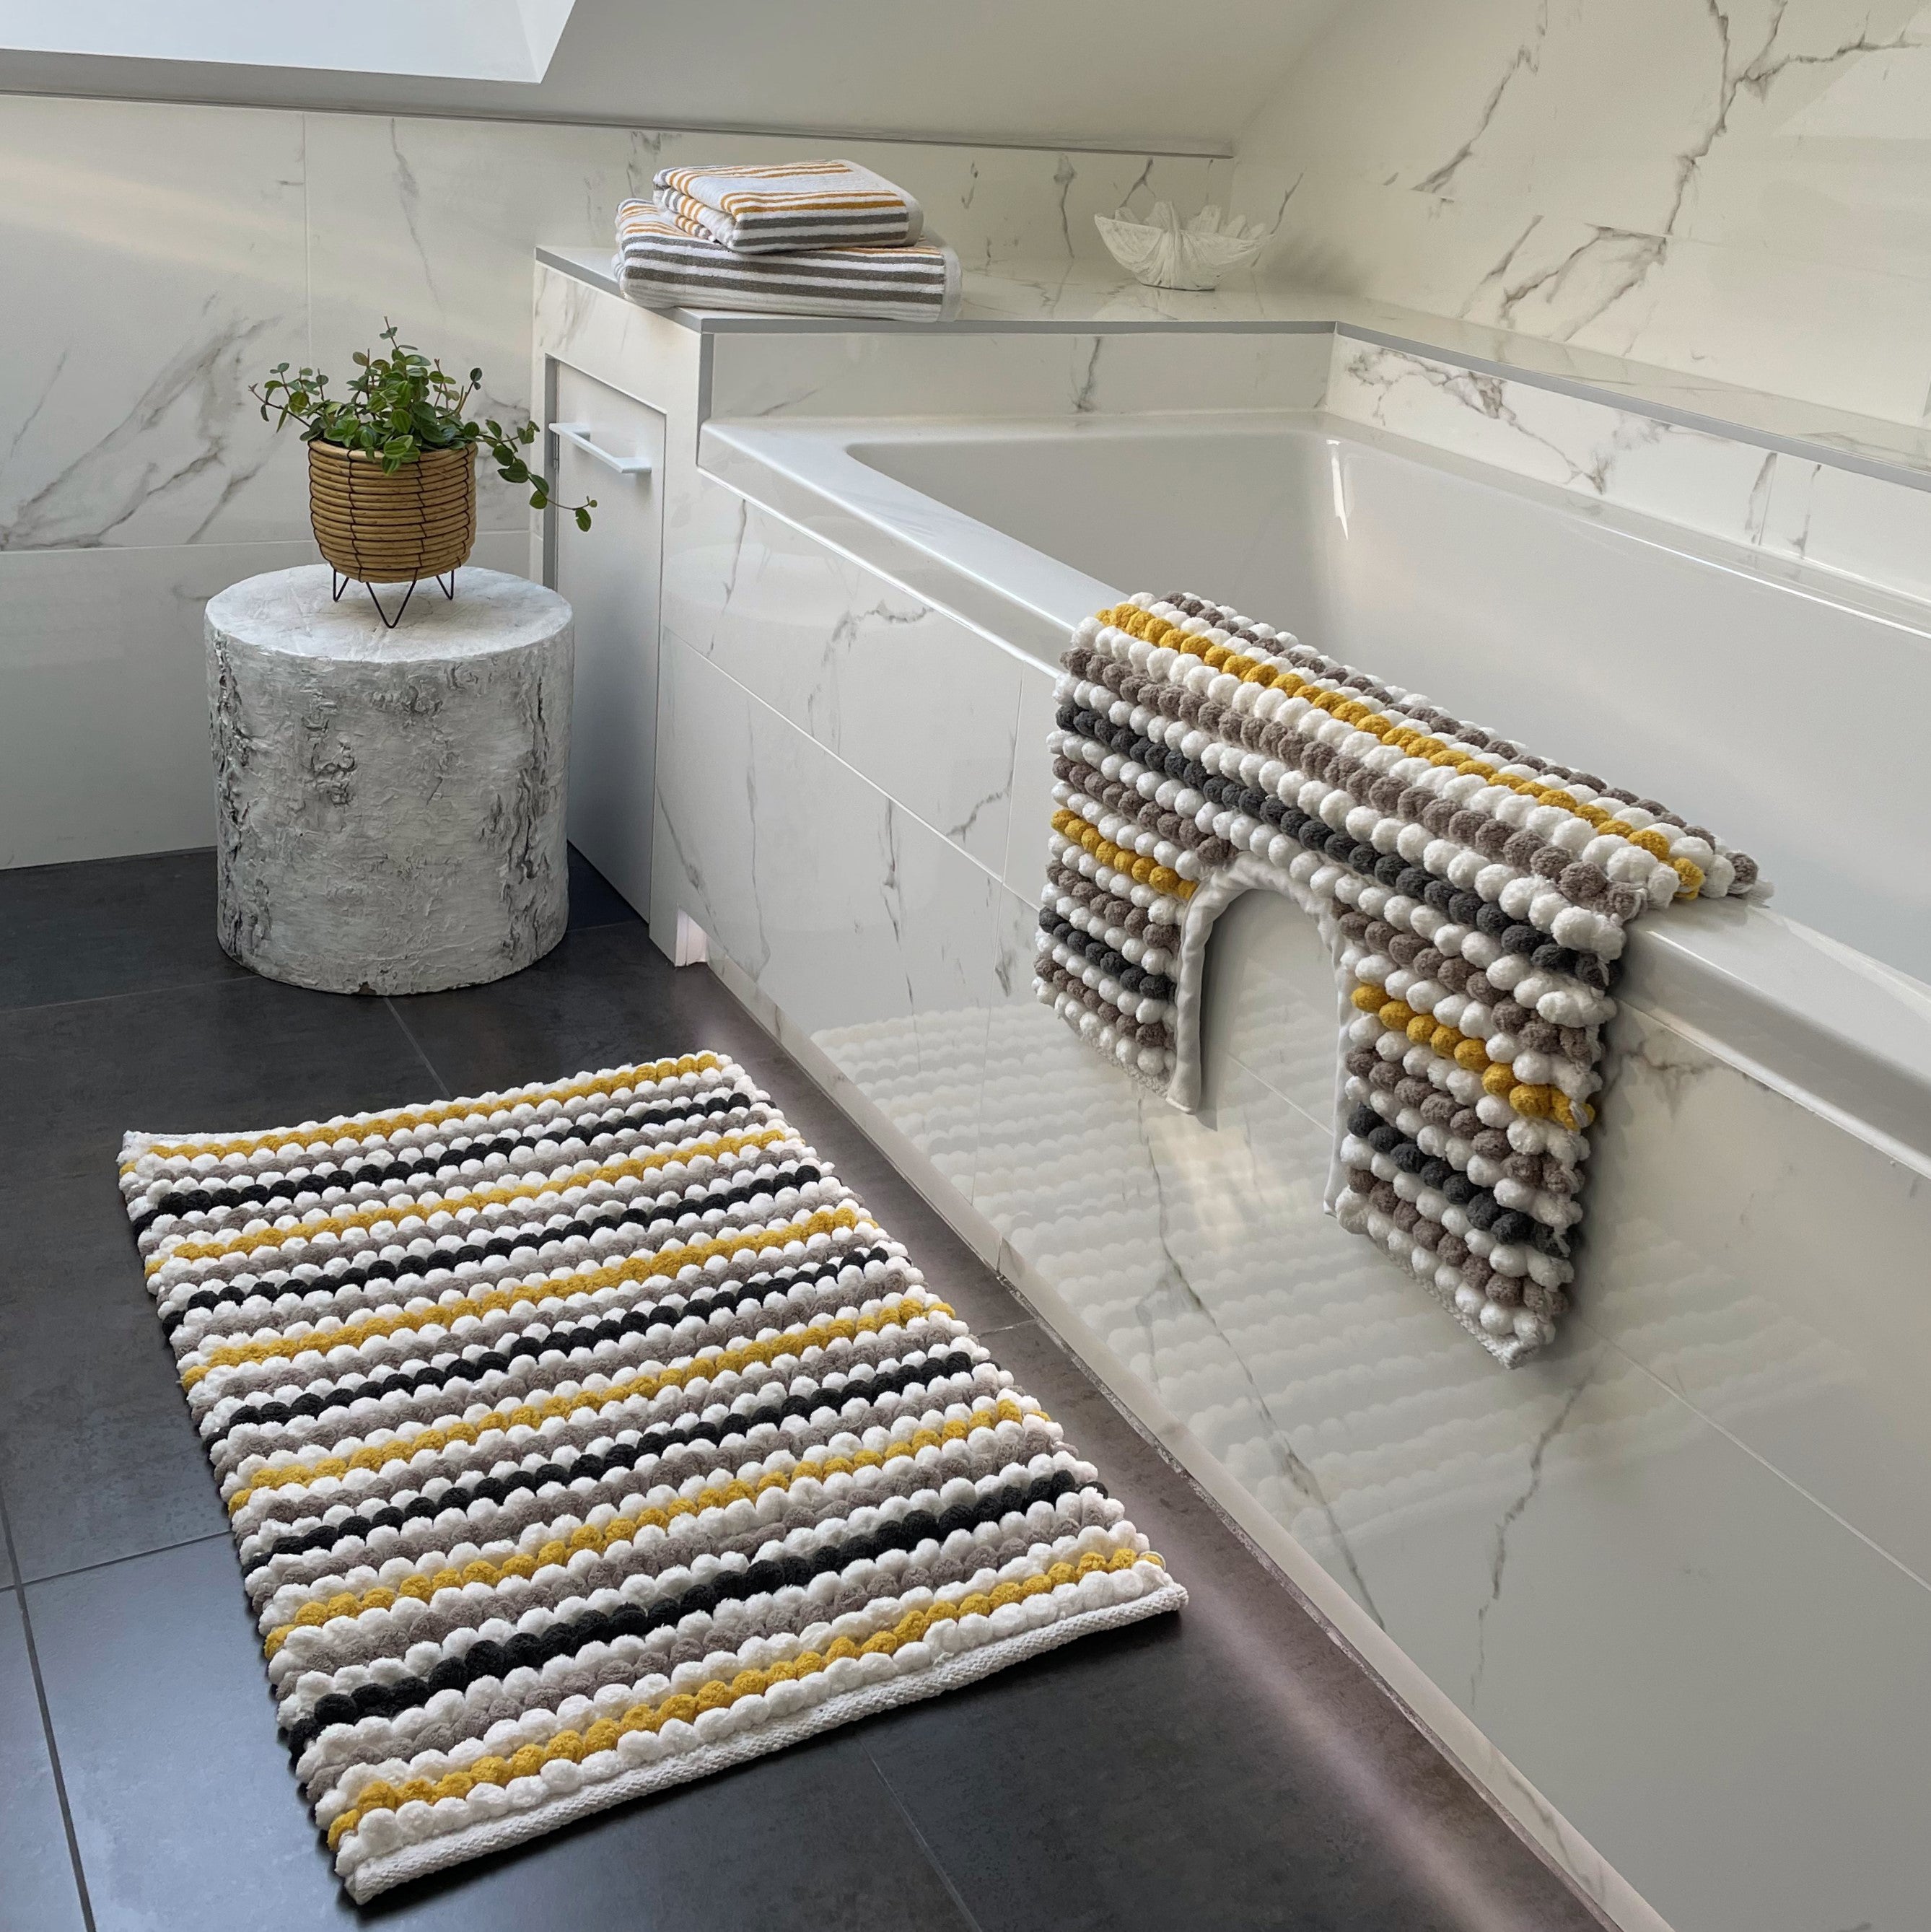 Mustard chunky bobble bath mats - premium striped bathroom mats